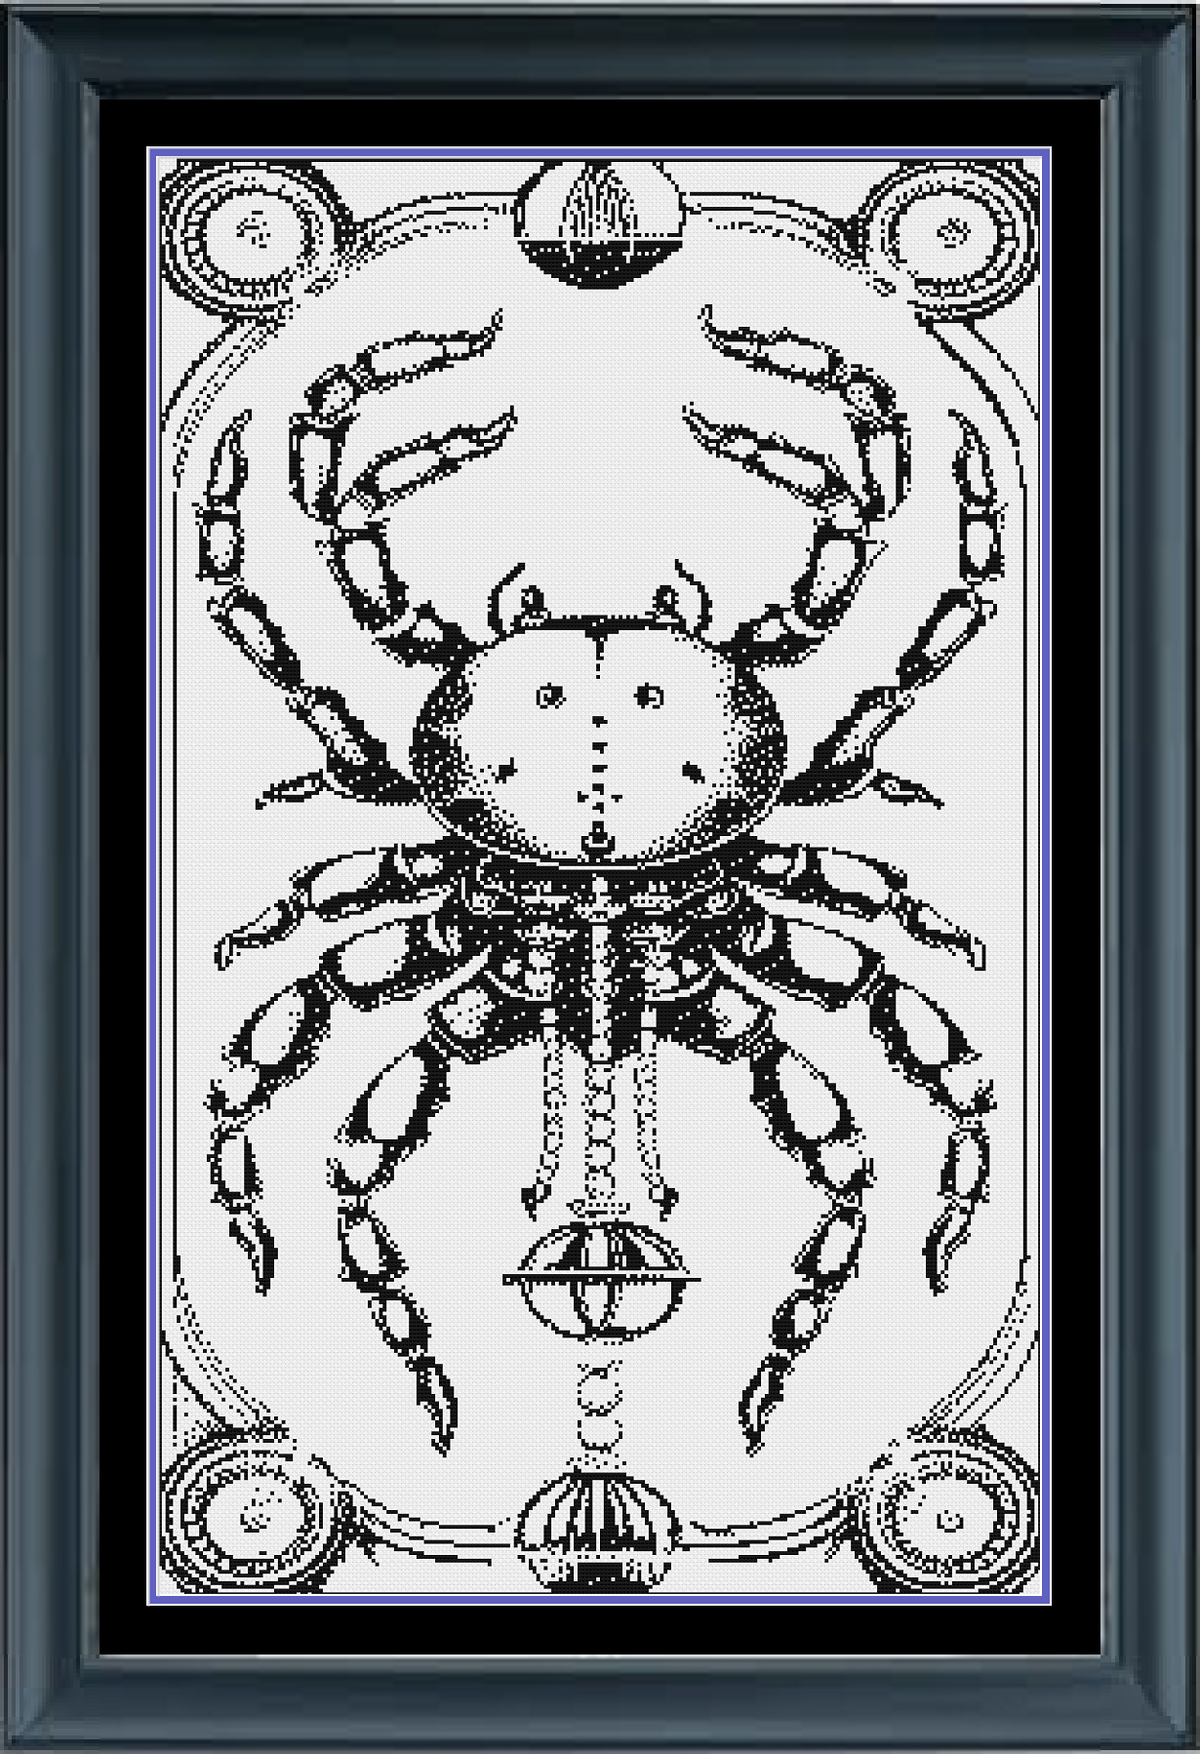 Cancer Tarot Card Cross Stitch Pattern | Astrology Horoscope Zodiac Cross Stitch Pattern | Monochrome Blackwork | Instant Pattern PDF